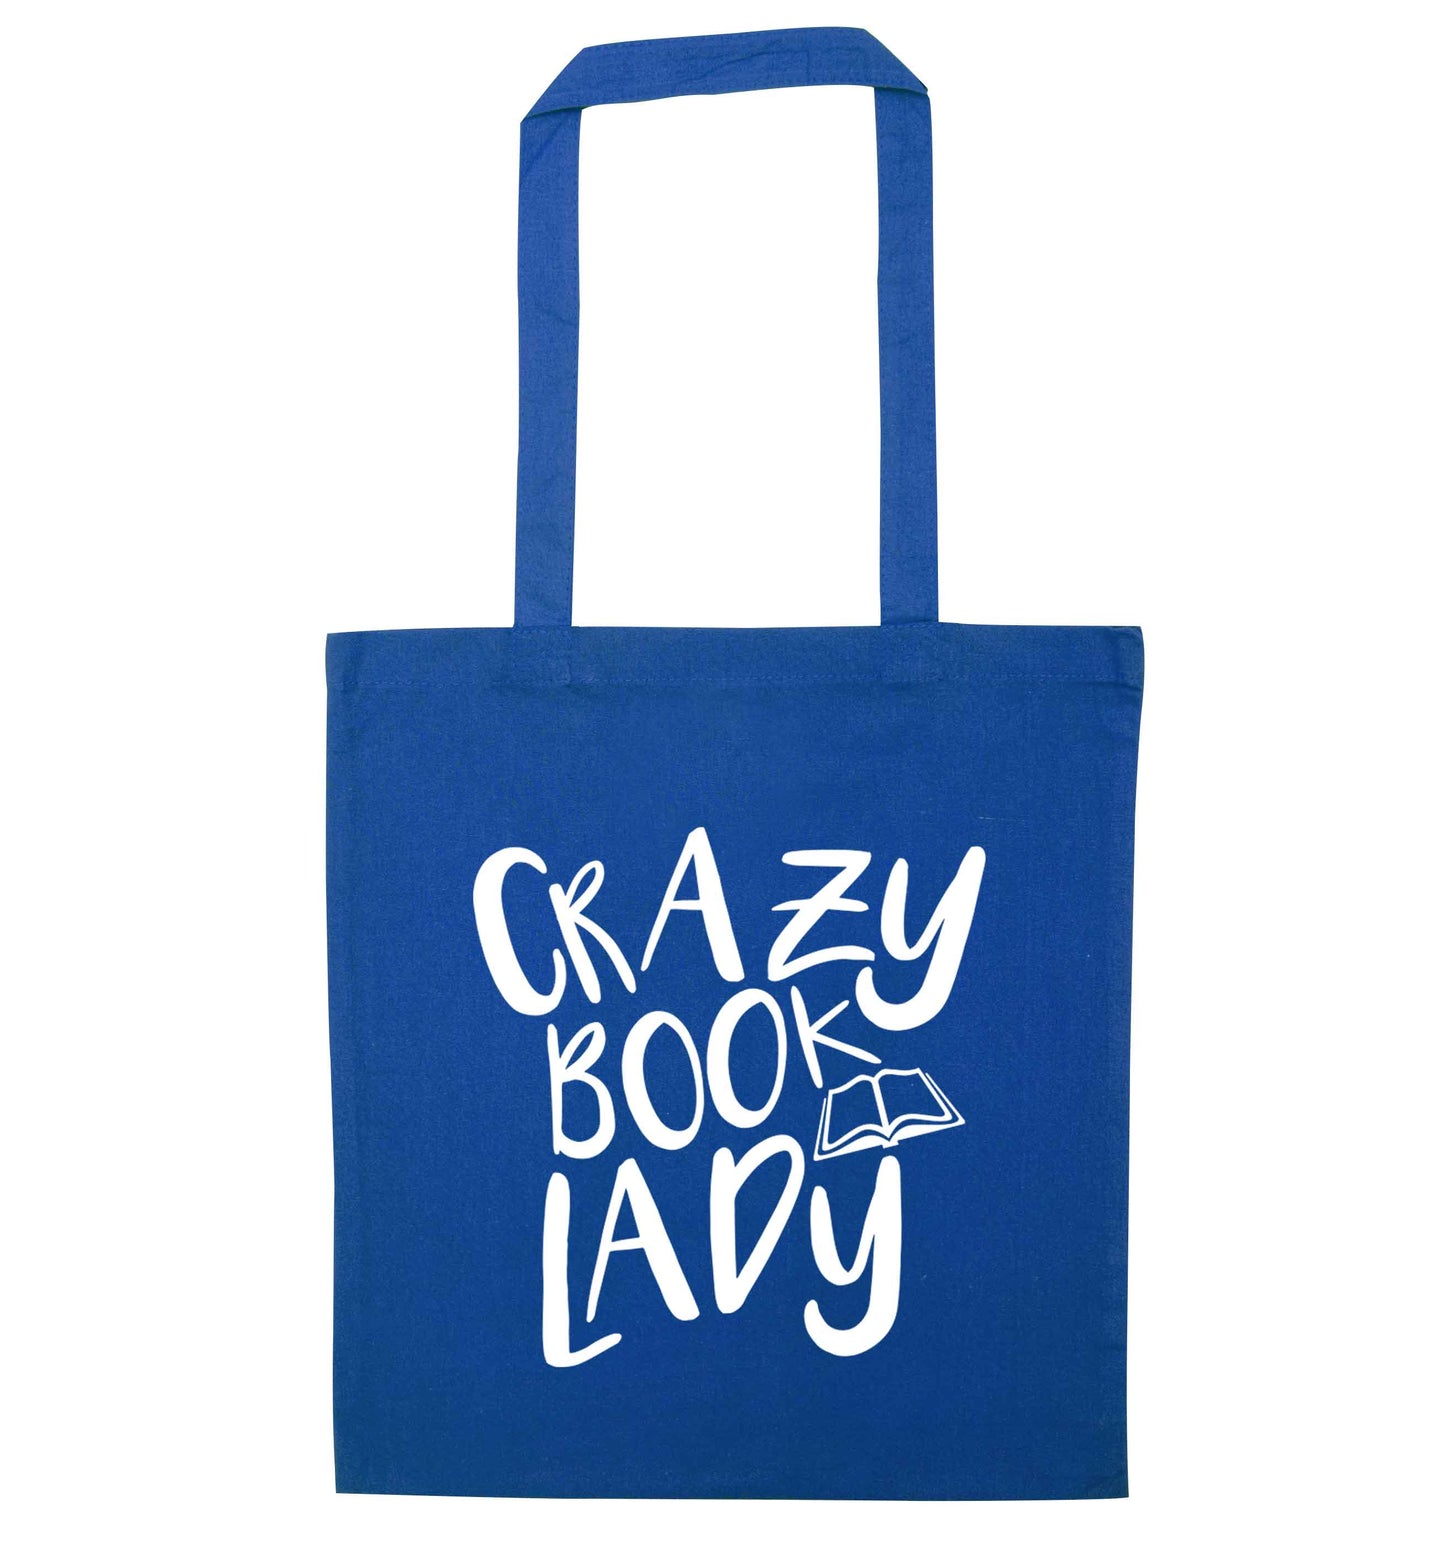 Crazy book lady blue tote bag